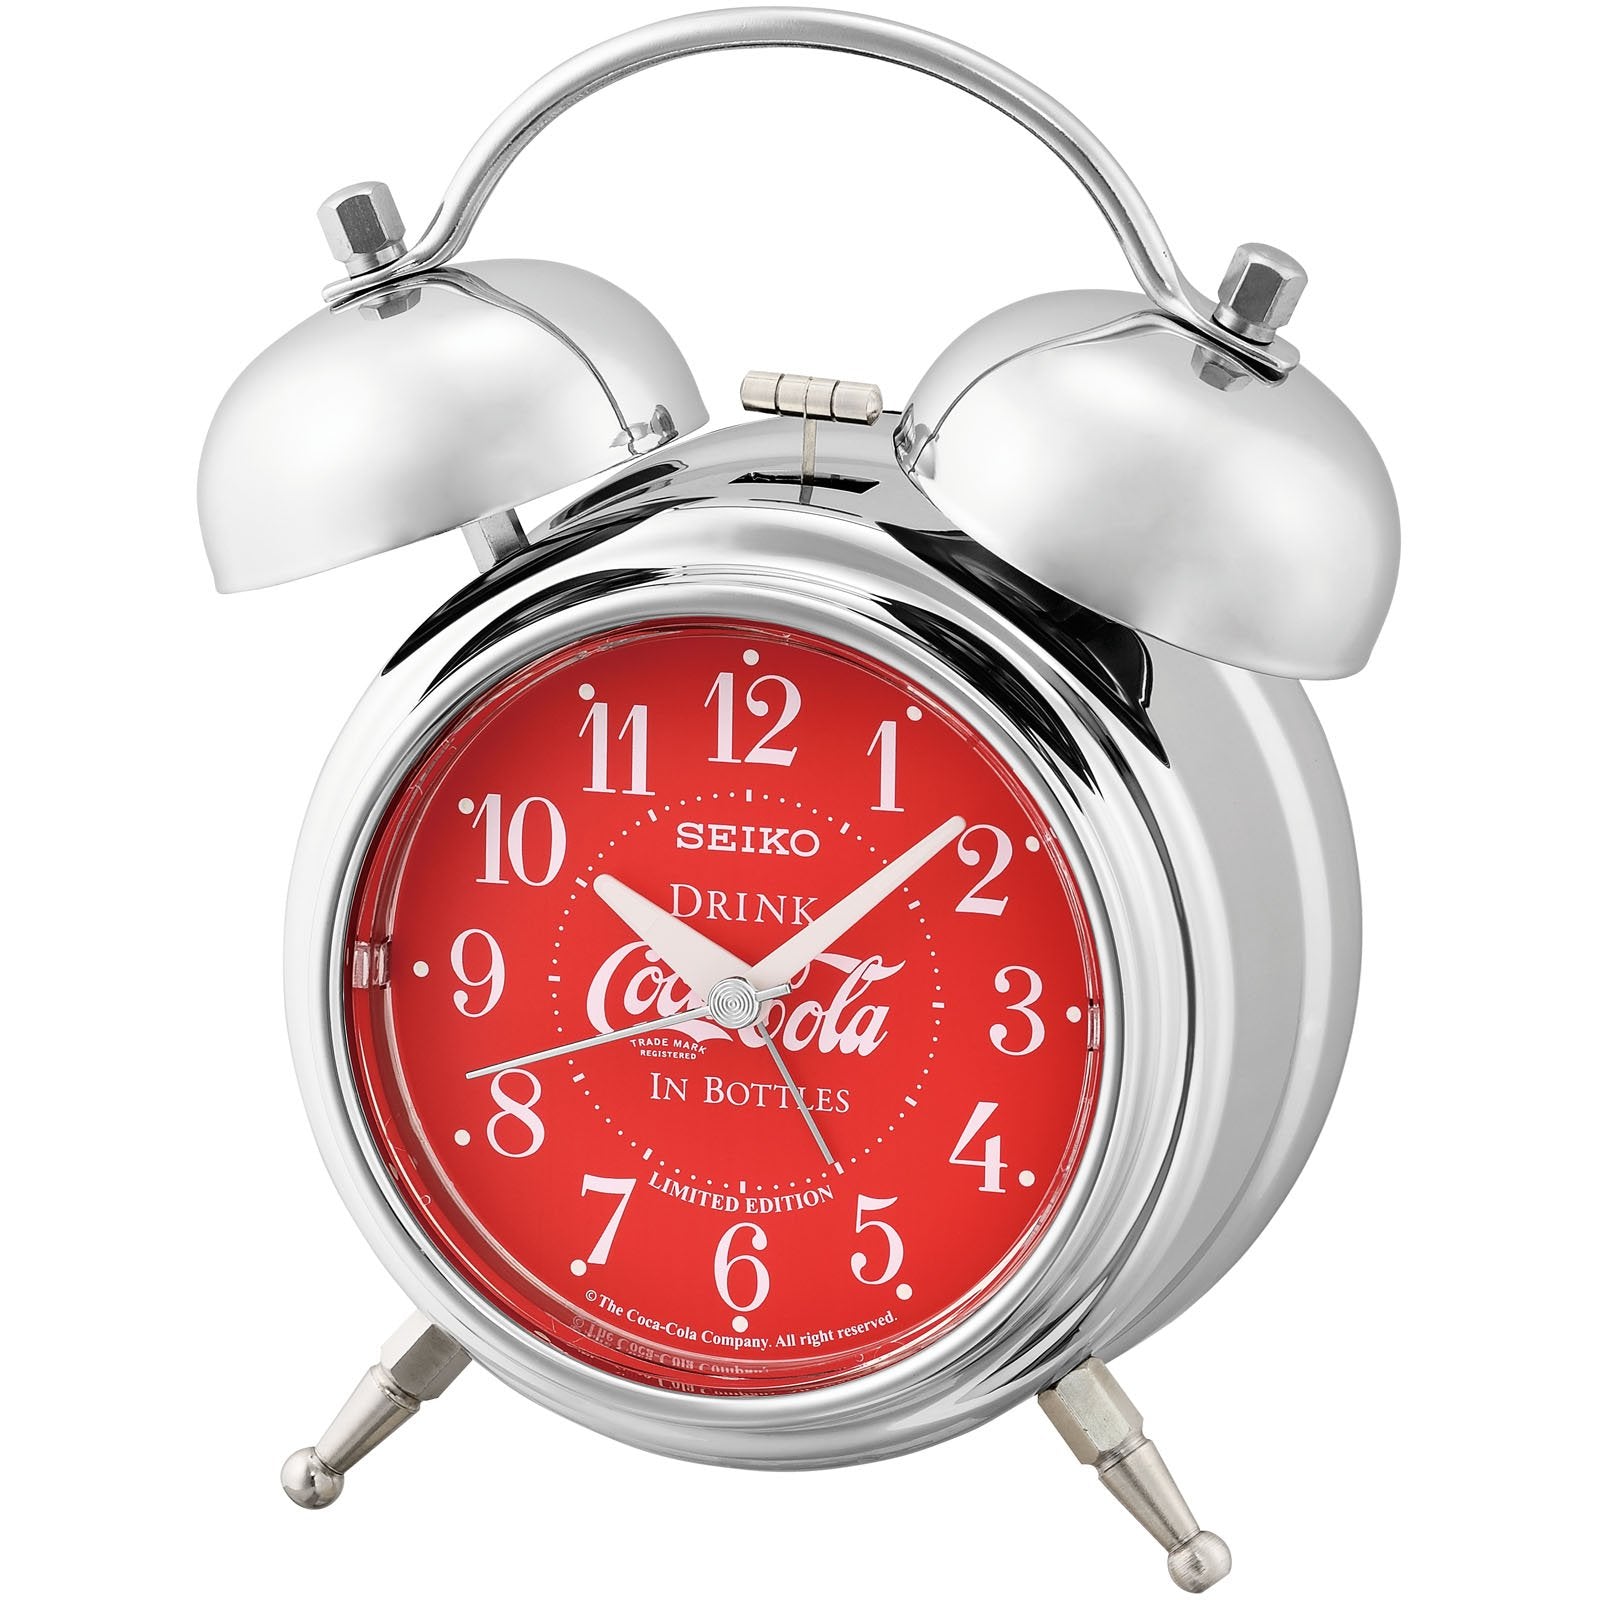 Seiko Coca Cola Limited Edition Bell Alarm Clock Silver & Red – Oh Clocks